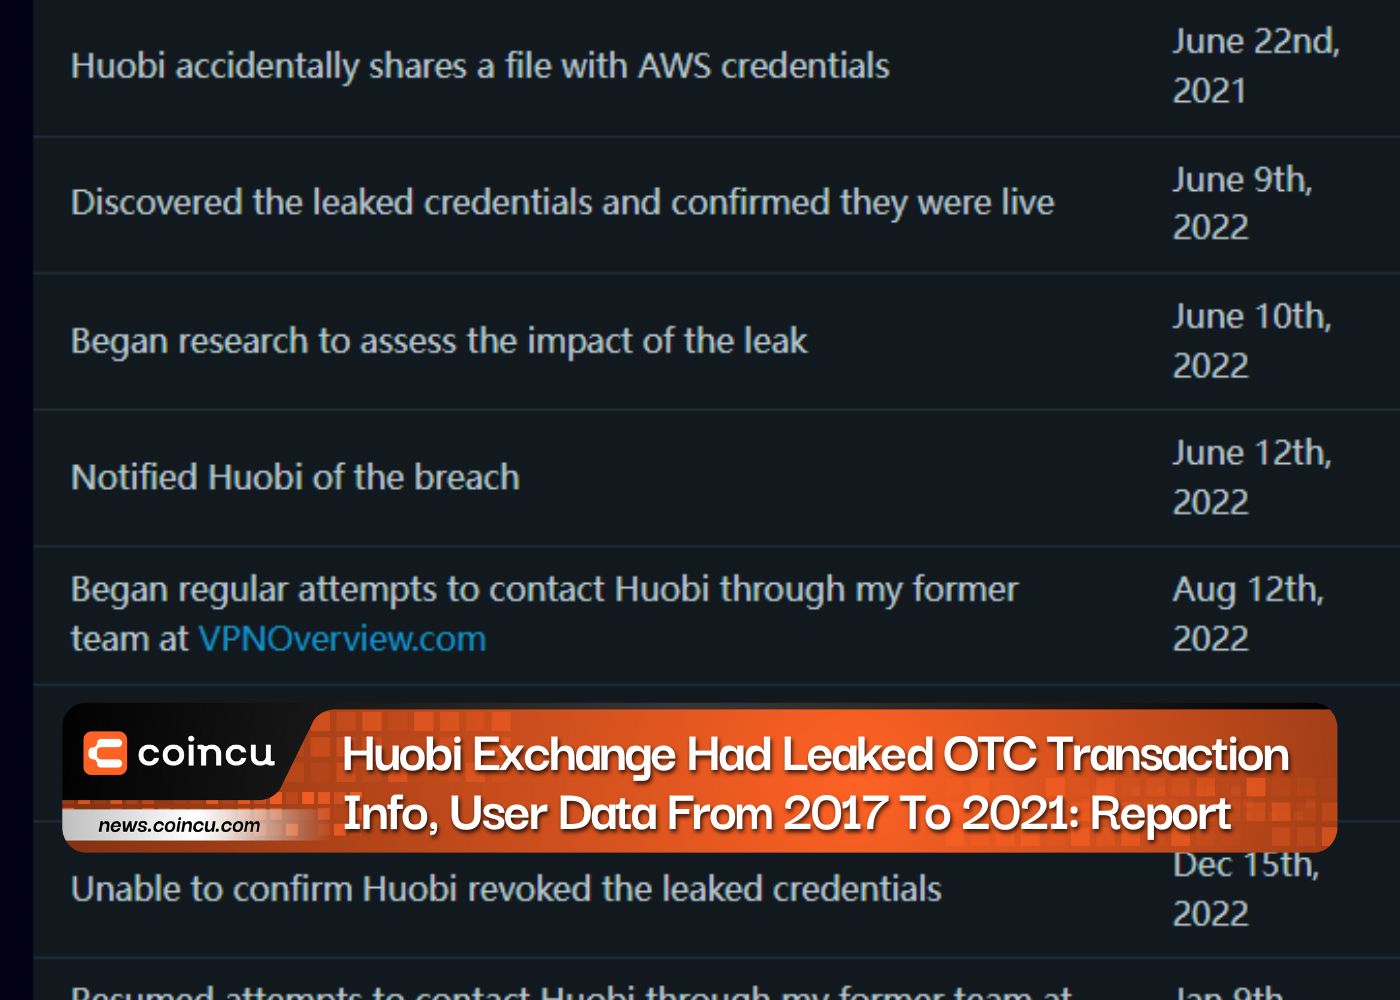 Huobi Exchange Had Leaked OTC Transaction Info, User Data From 2017 To 2021: Report